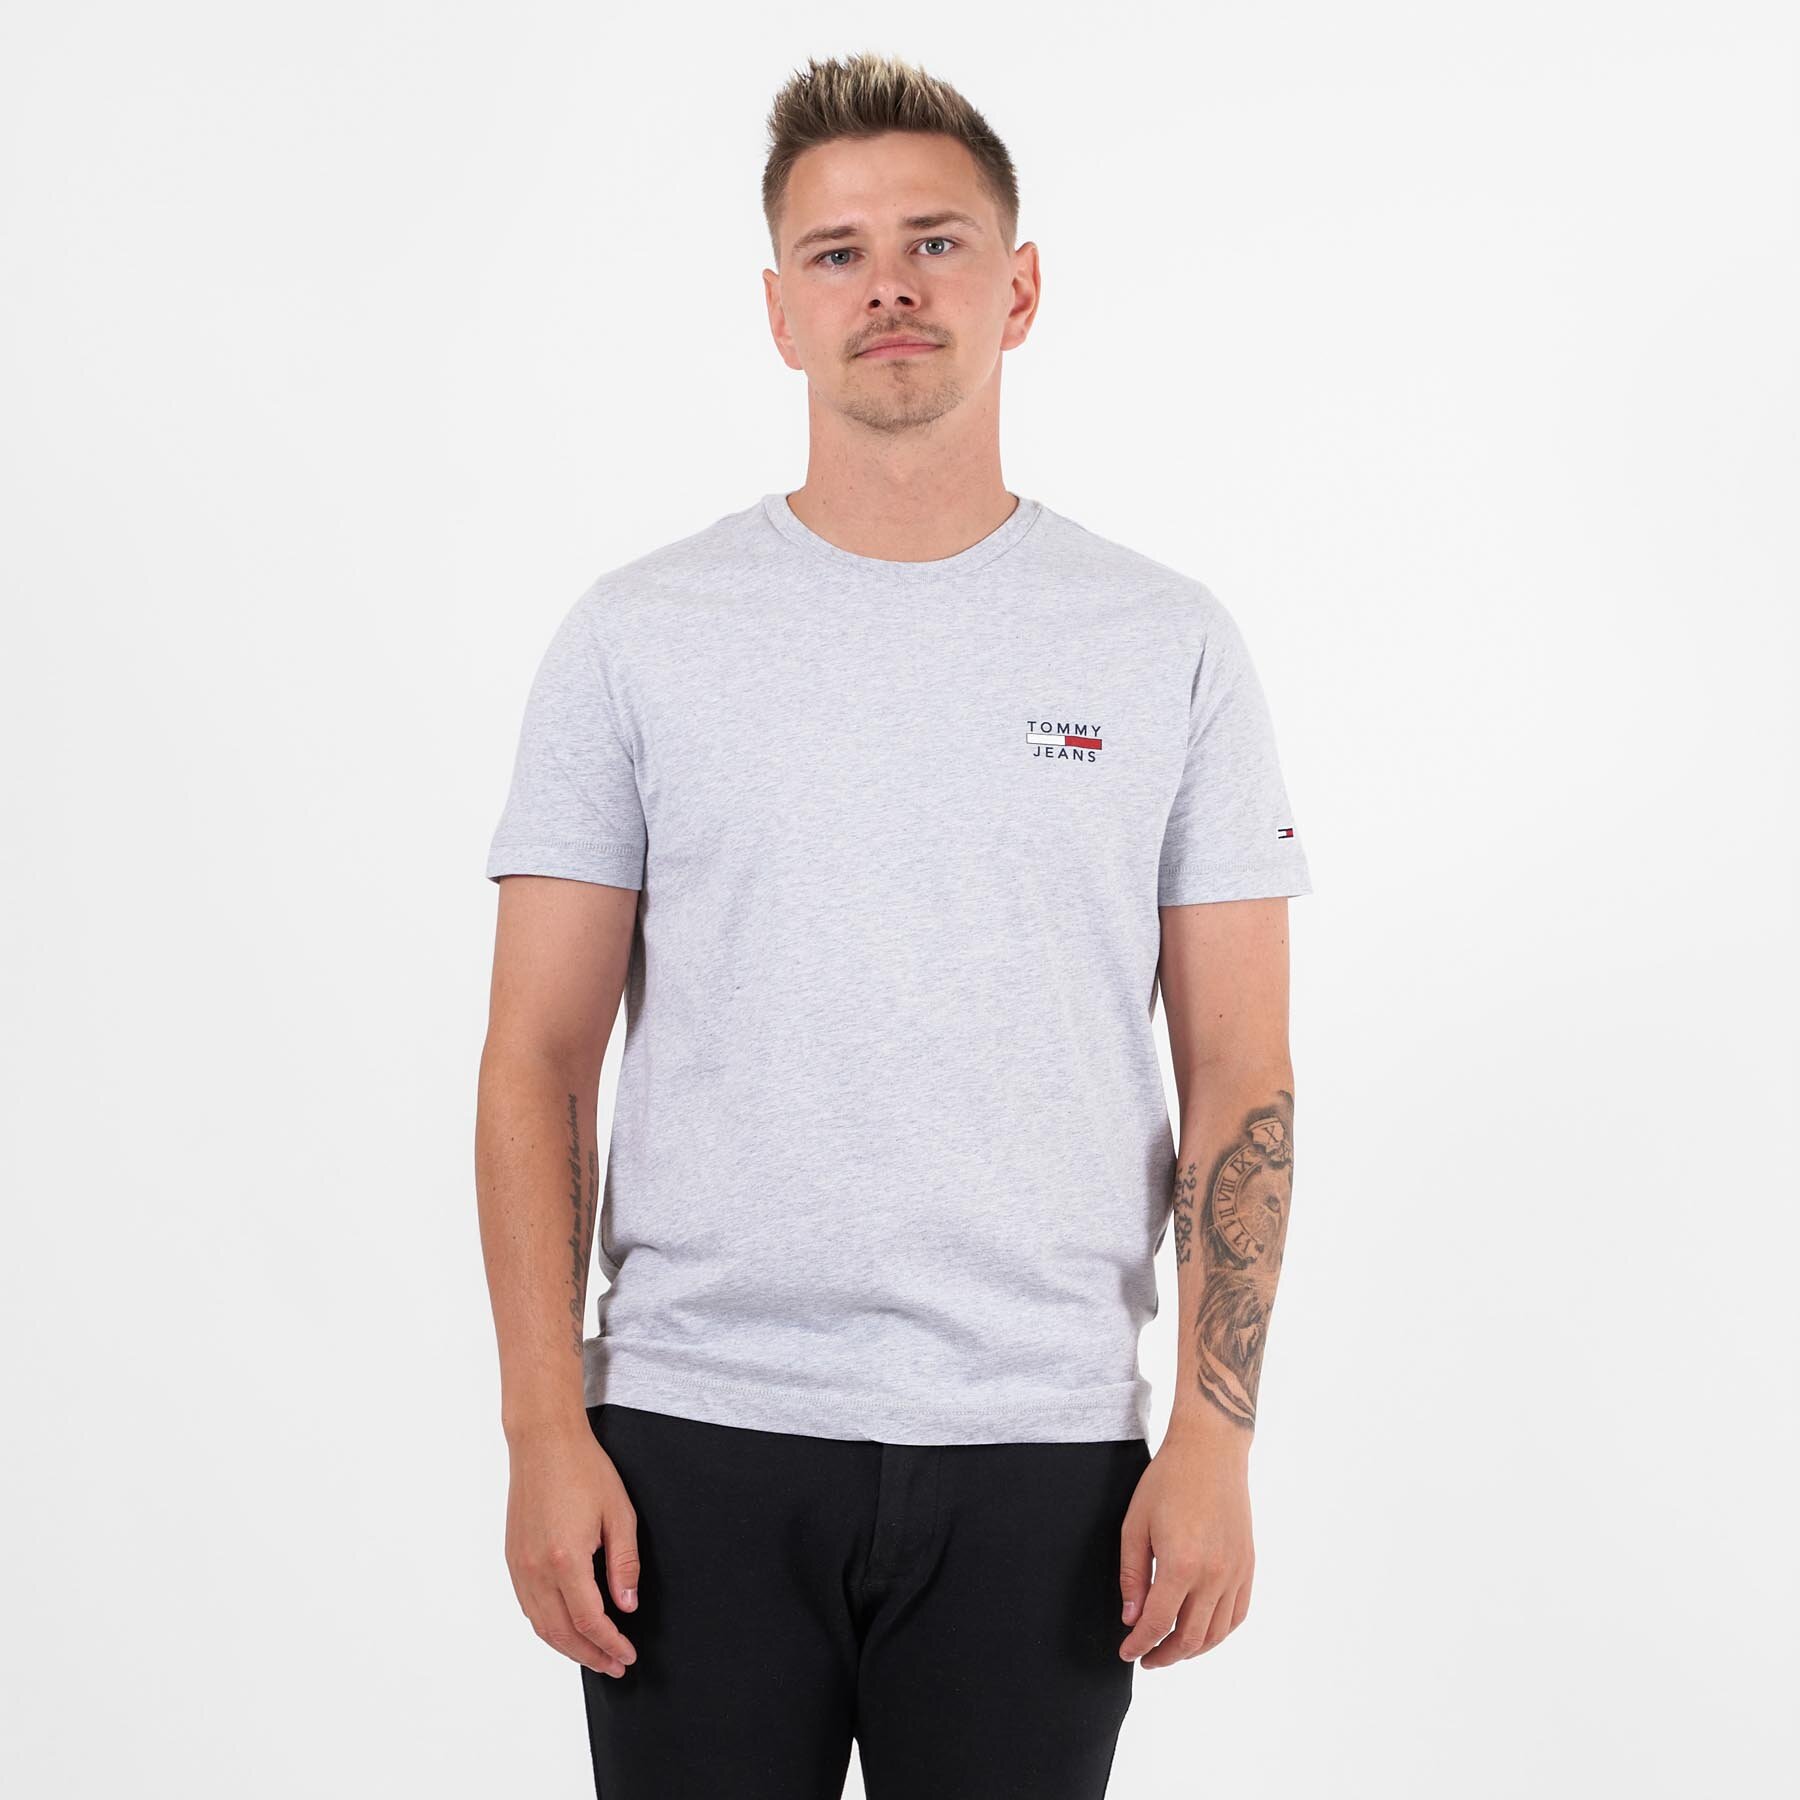 Tommy Jeans - Tjm chest logo tee - T-shirts til mænd - Grå - XXL